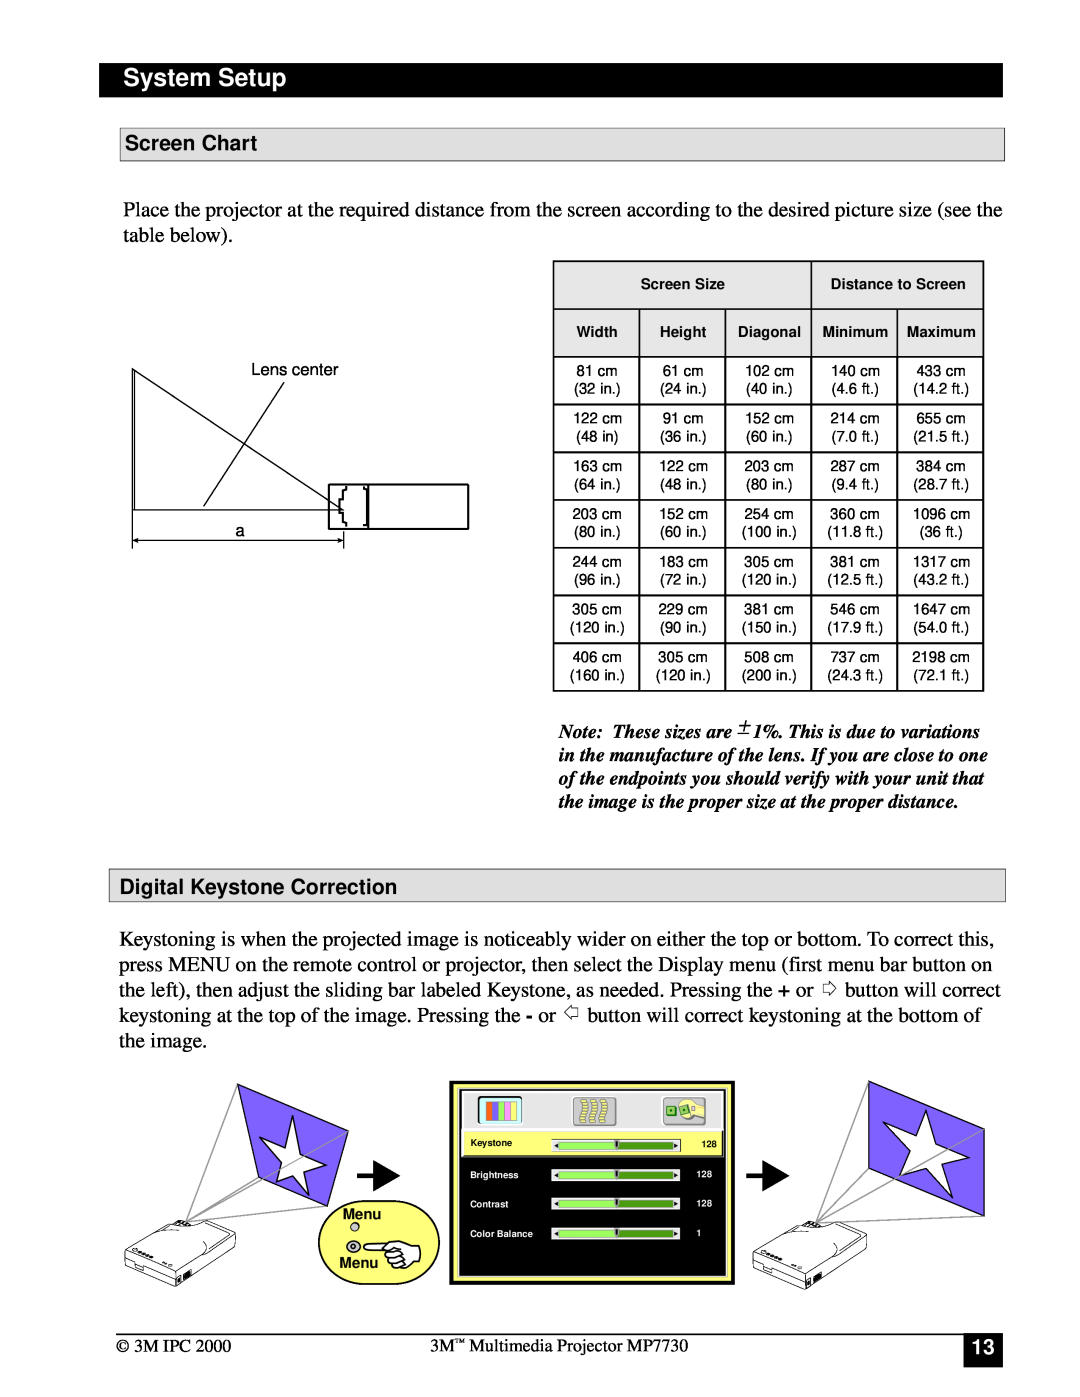 Apple MP7730 manual System Setup, Screen Chart, Digital Keystone Correction 